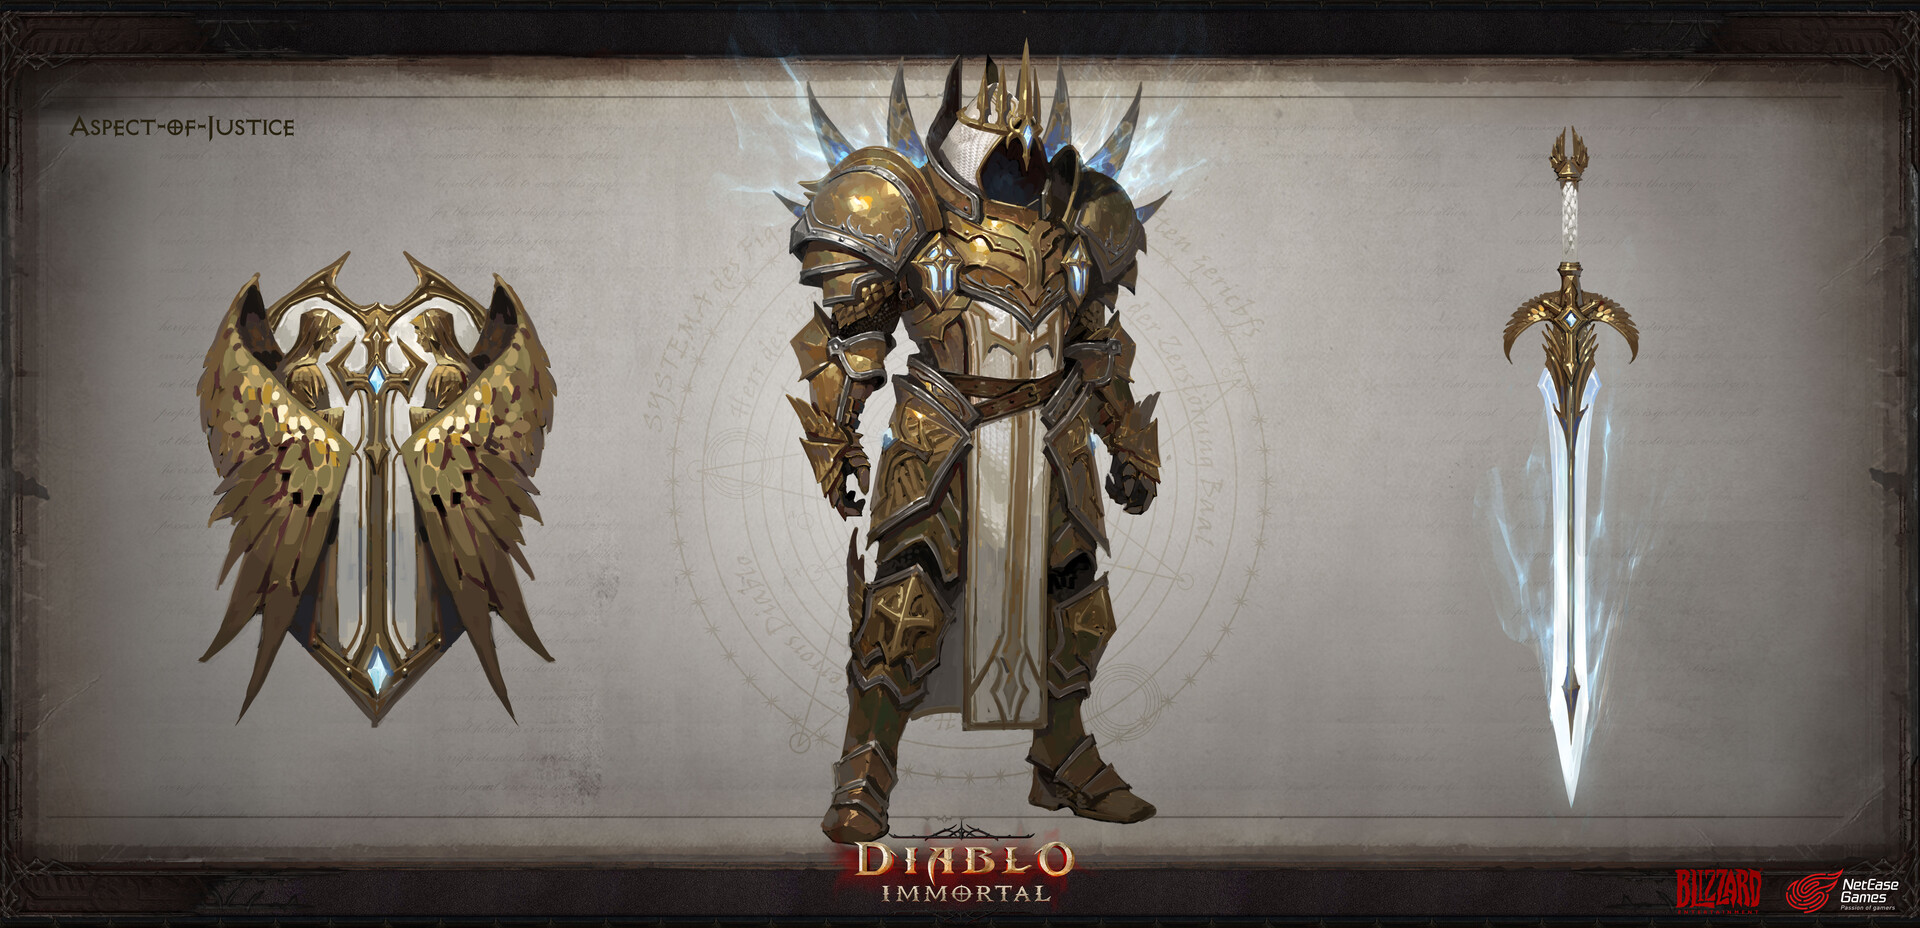 Diablo Immortal: Aspect of Justice